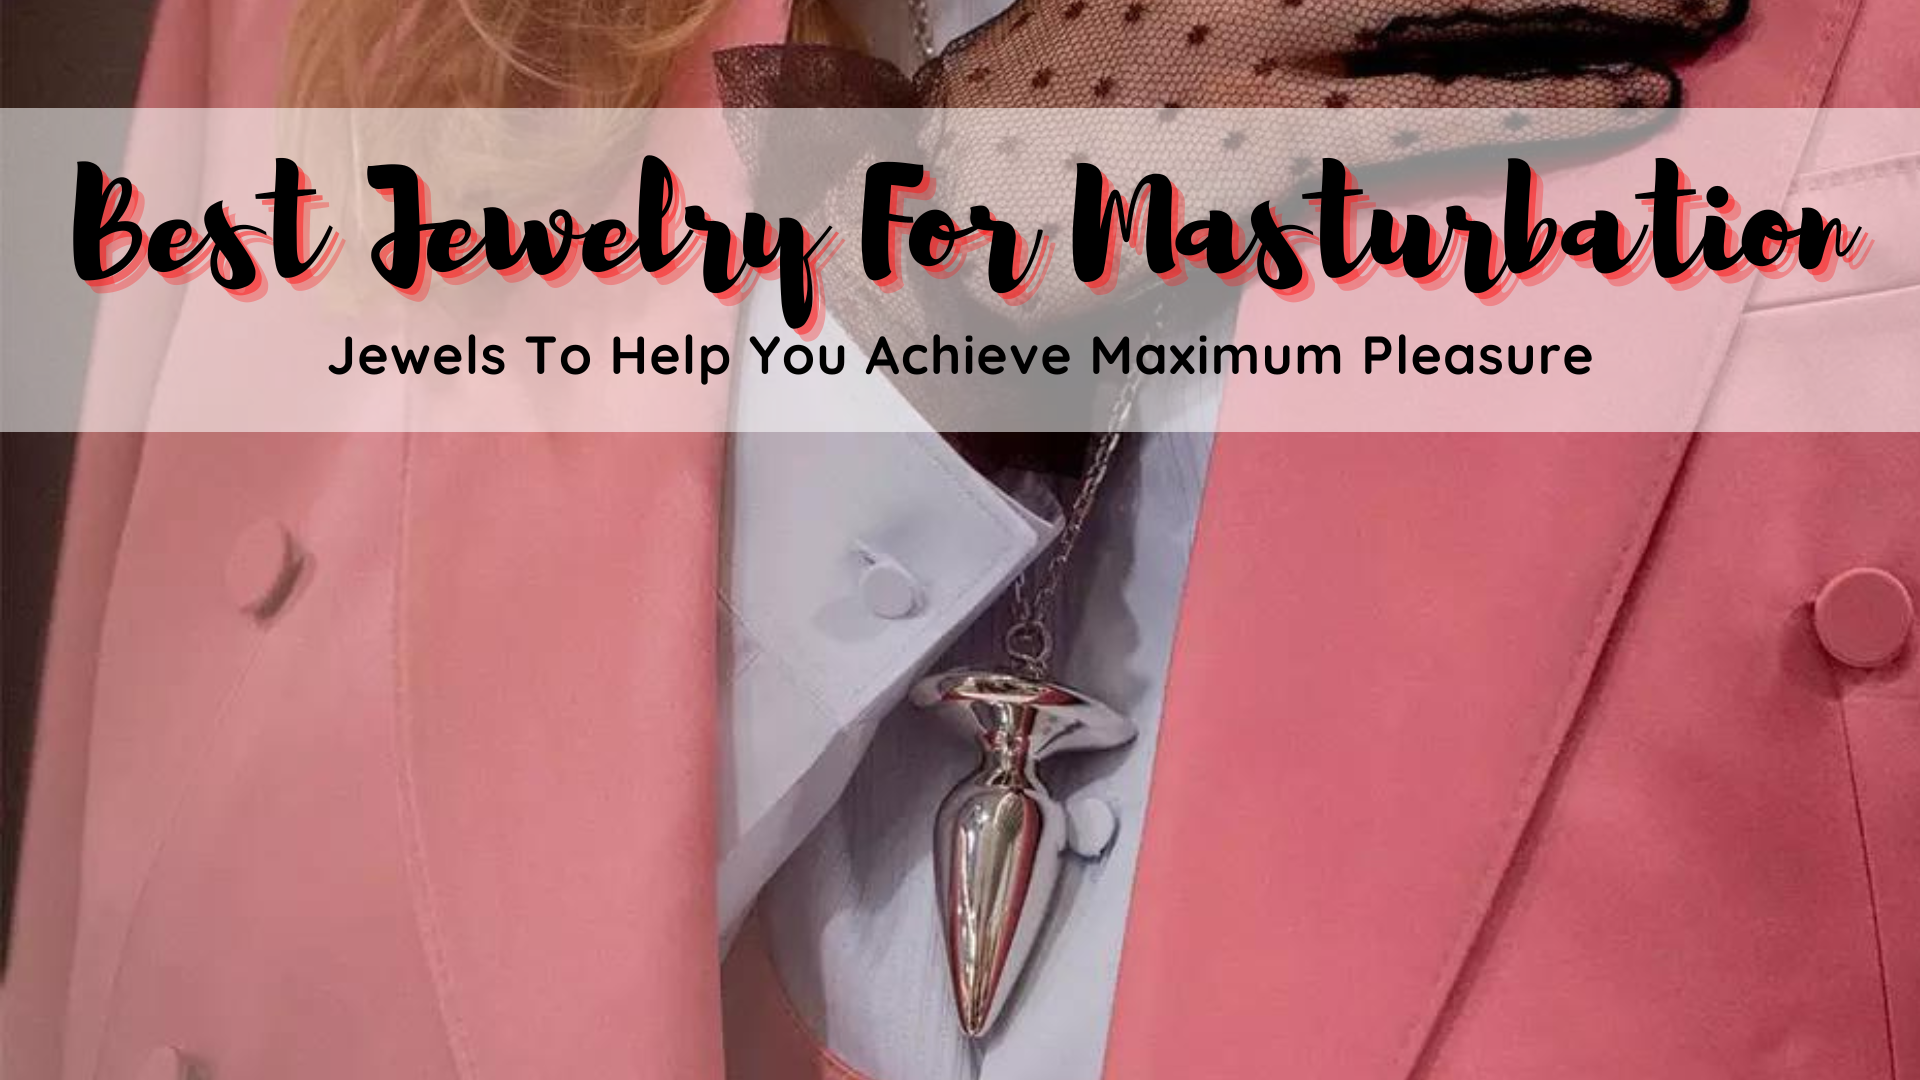 Best Jewelry For Masturbation - Jewels To Help You Achieve Maximum Pleasure